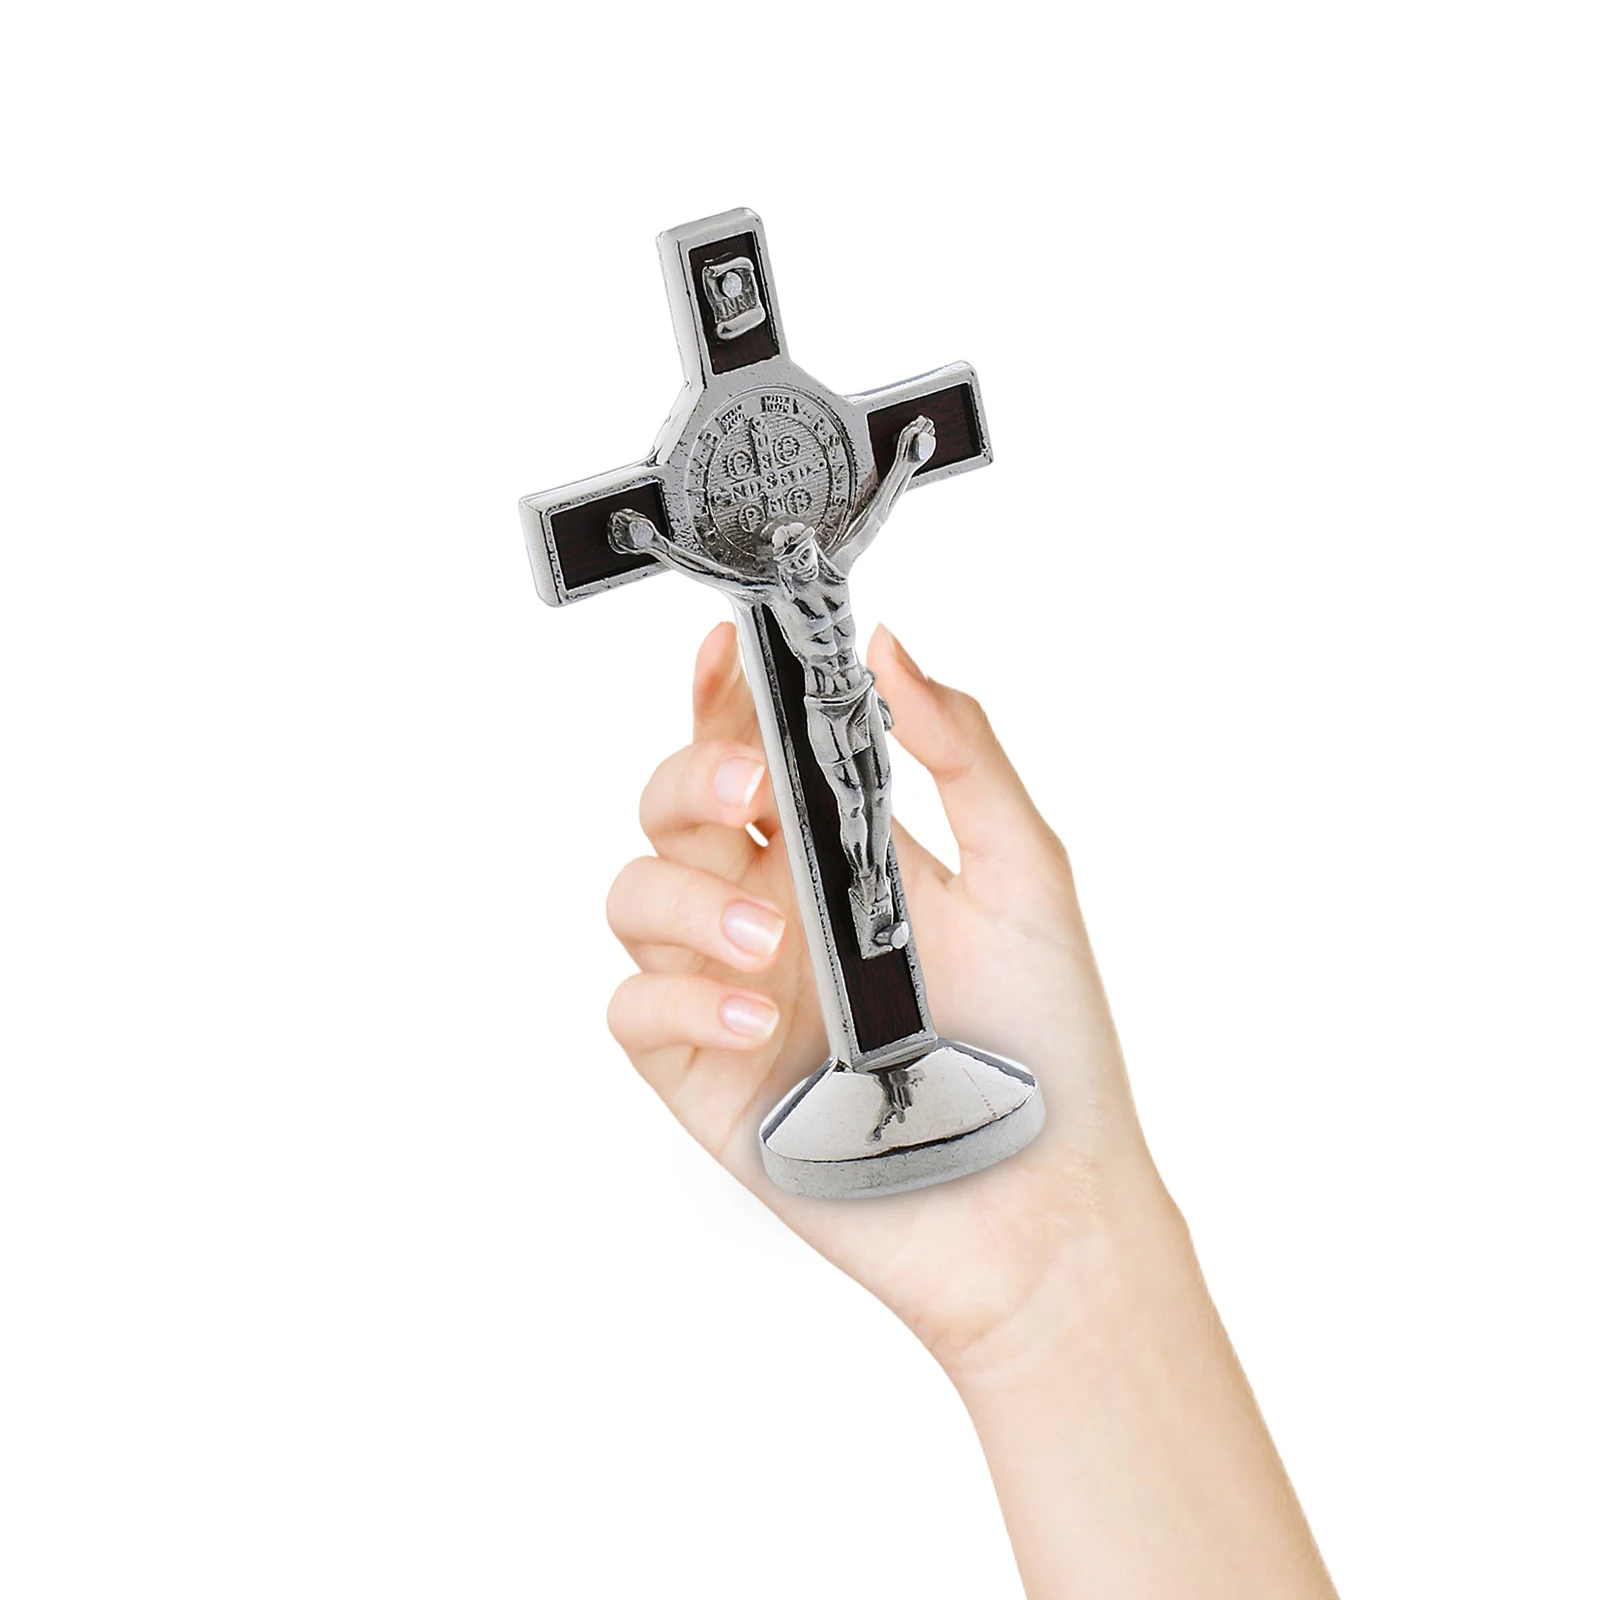 3.5 inch Metal Crucifix Model Jesus on Cross Figure Statue Sculpture Art Craft Christian Amulet Gift